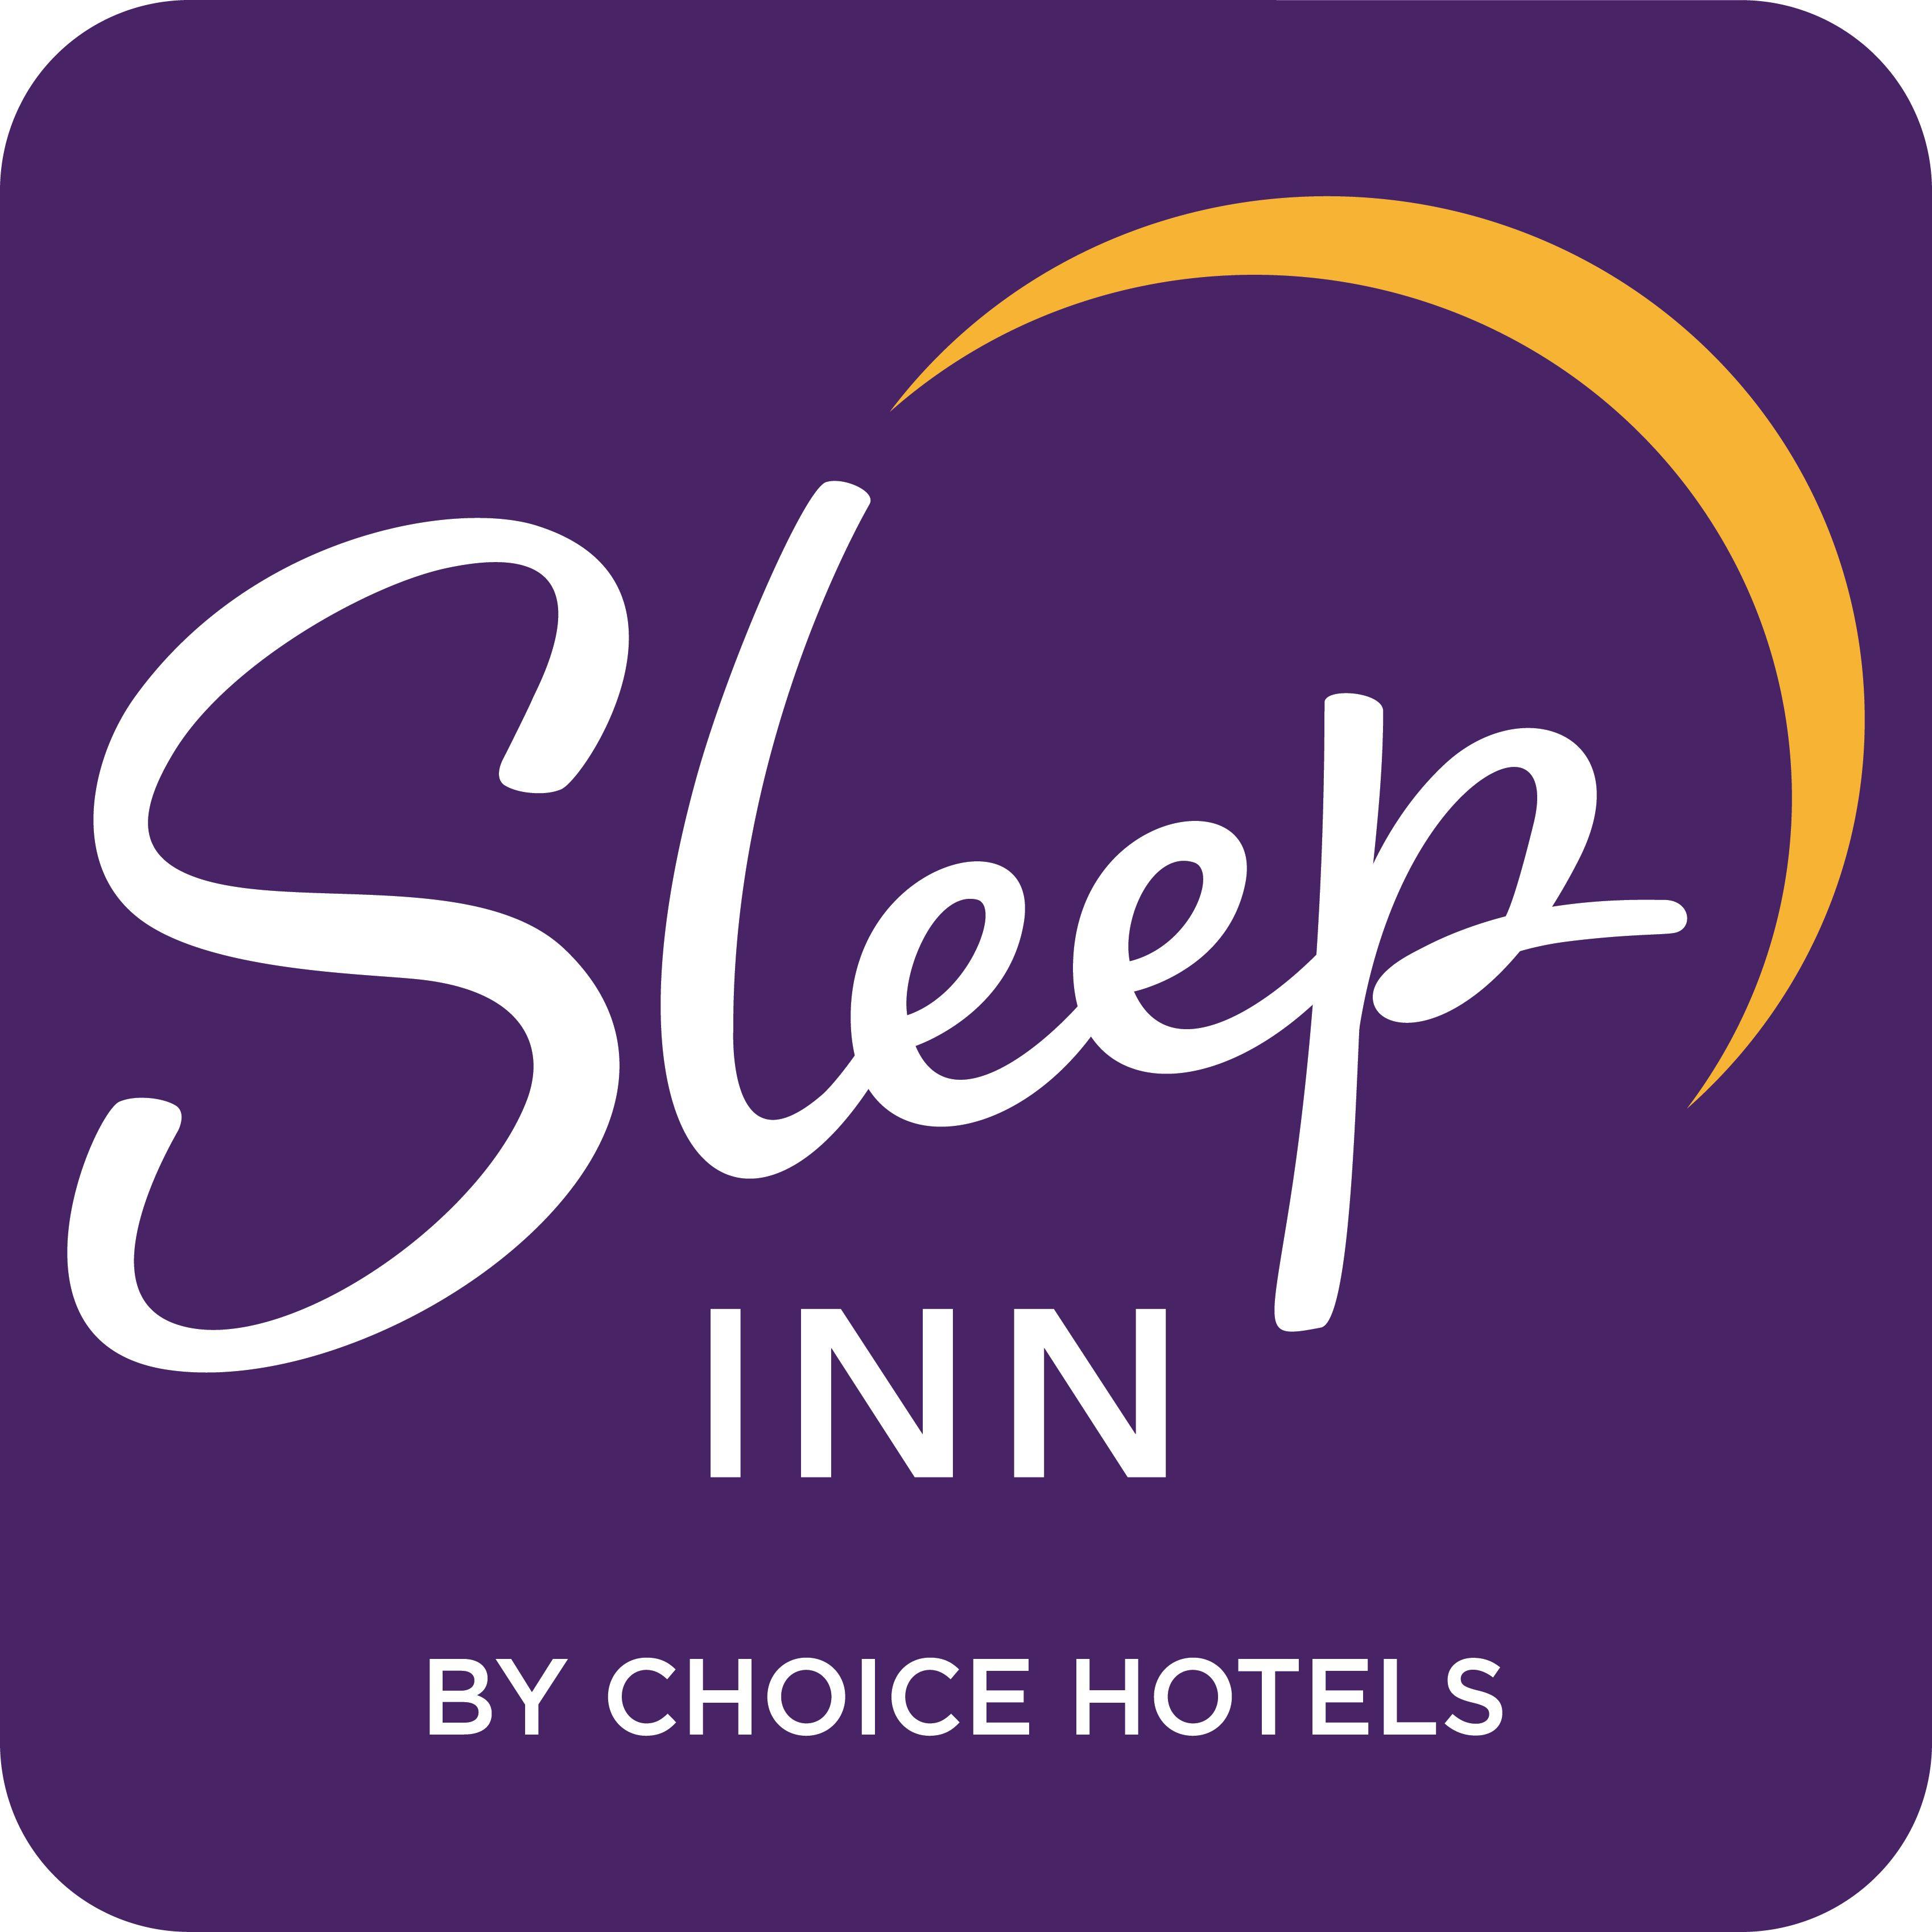 Inn Logo - Choice Hotels International Inn Press Kit